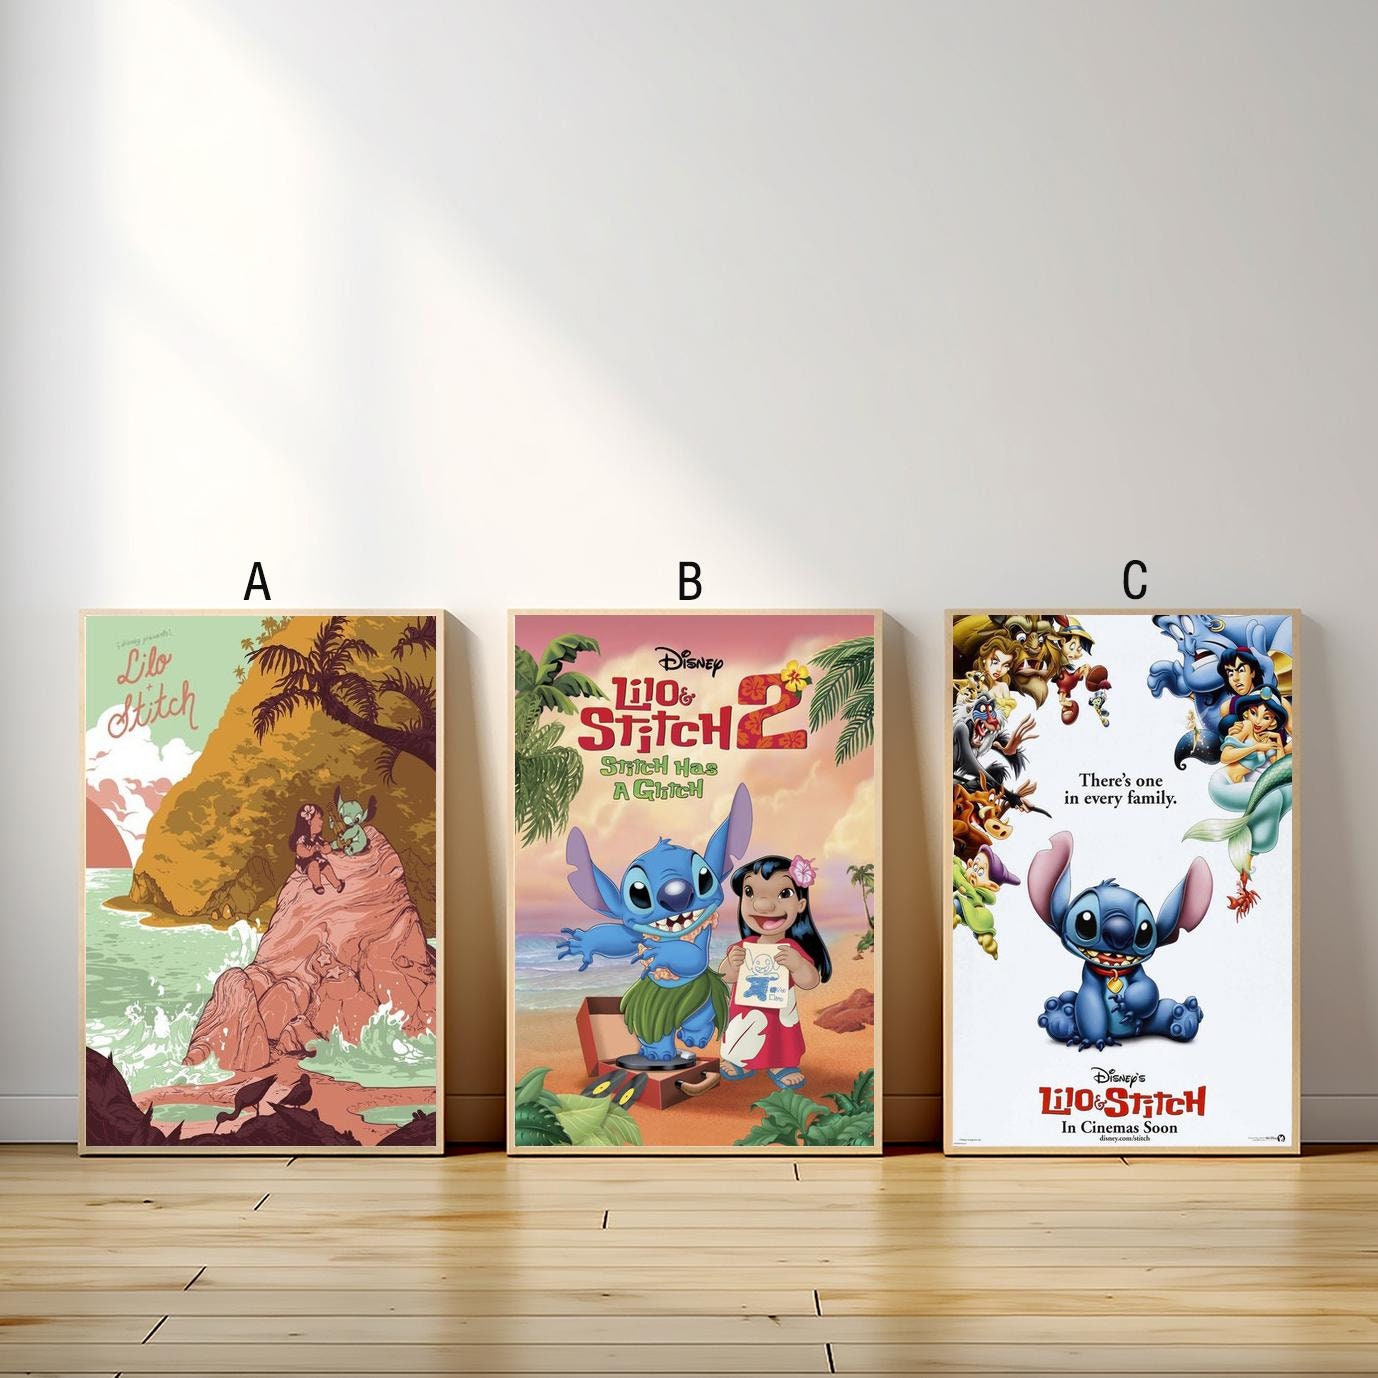 Lilo & Stitch - TV Show Poster (Ohana Means Family) (Size: 24 x 36)  (Poster & Poster Strip Set) 